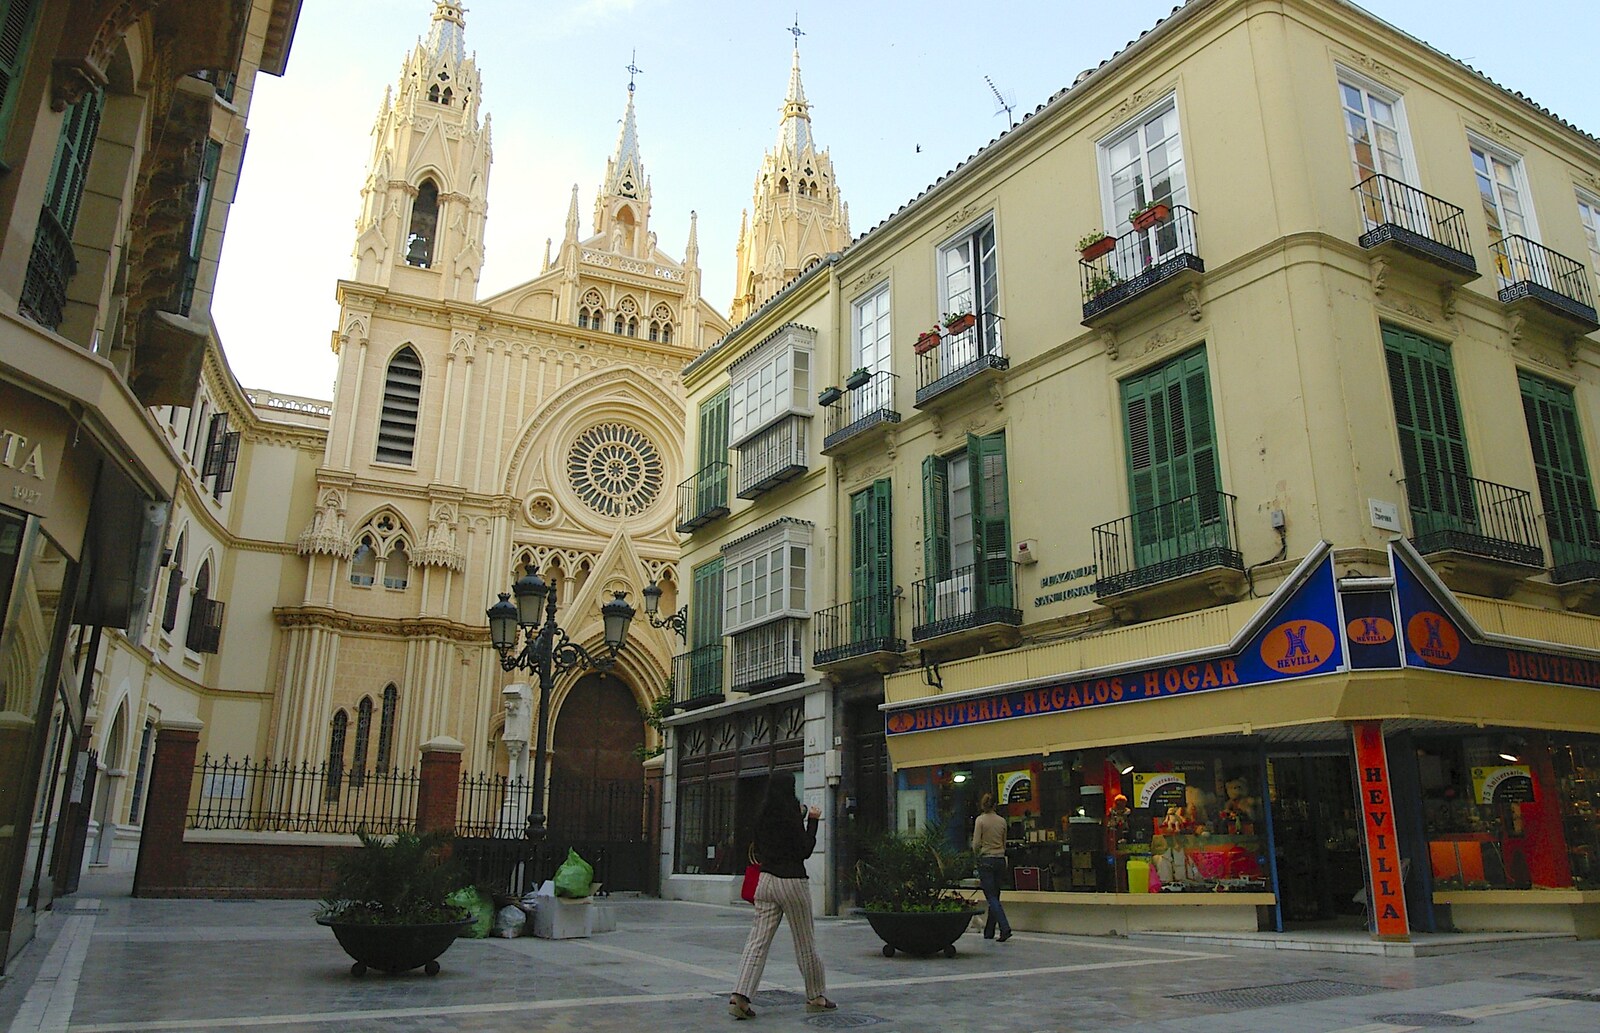 Málaga cathedral from Working at Telefónica, Malaga, Spain - 6th June 2006